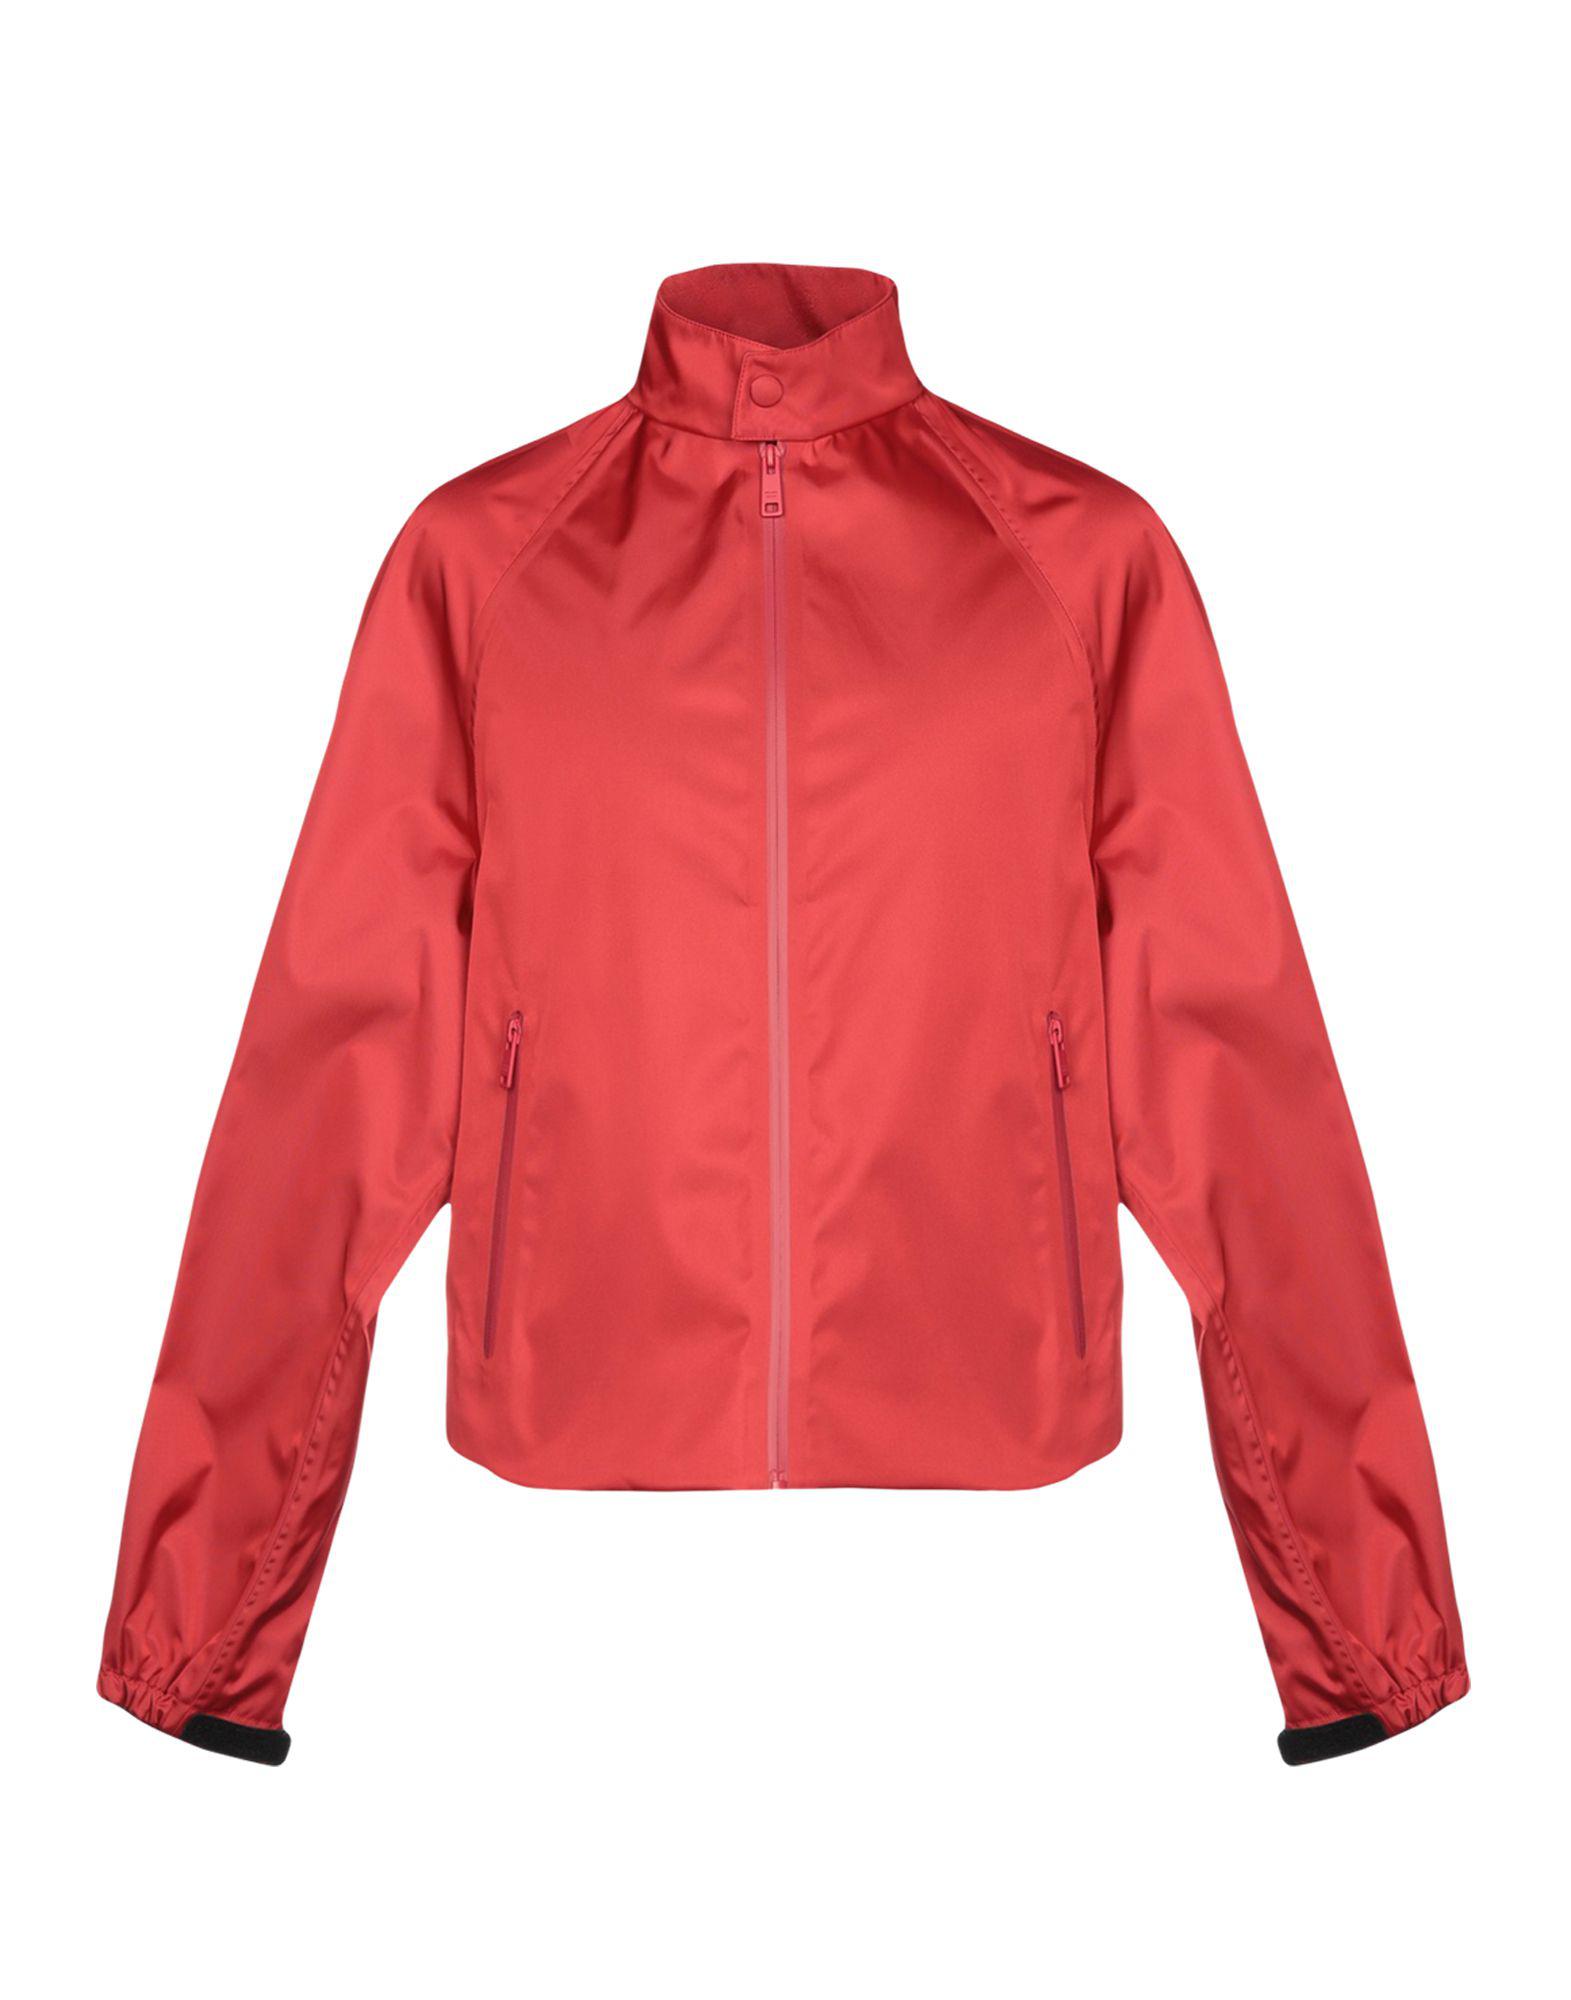 Prada Rubber Jacket in Red for Men - Lyst